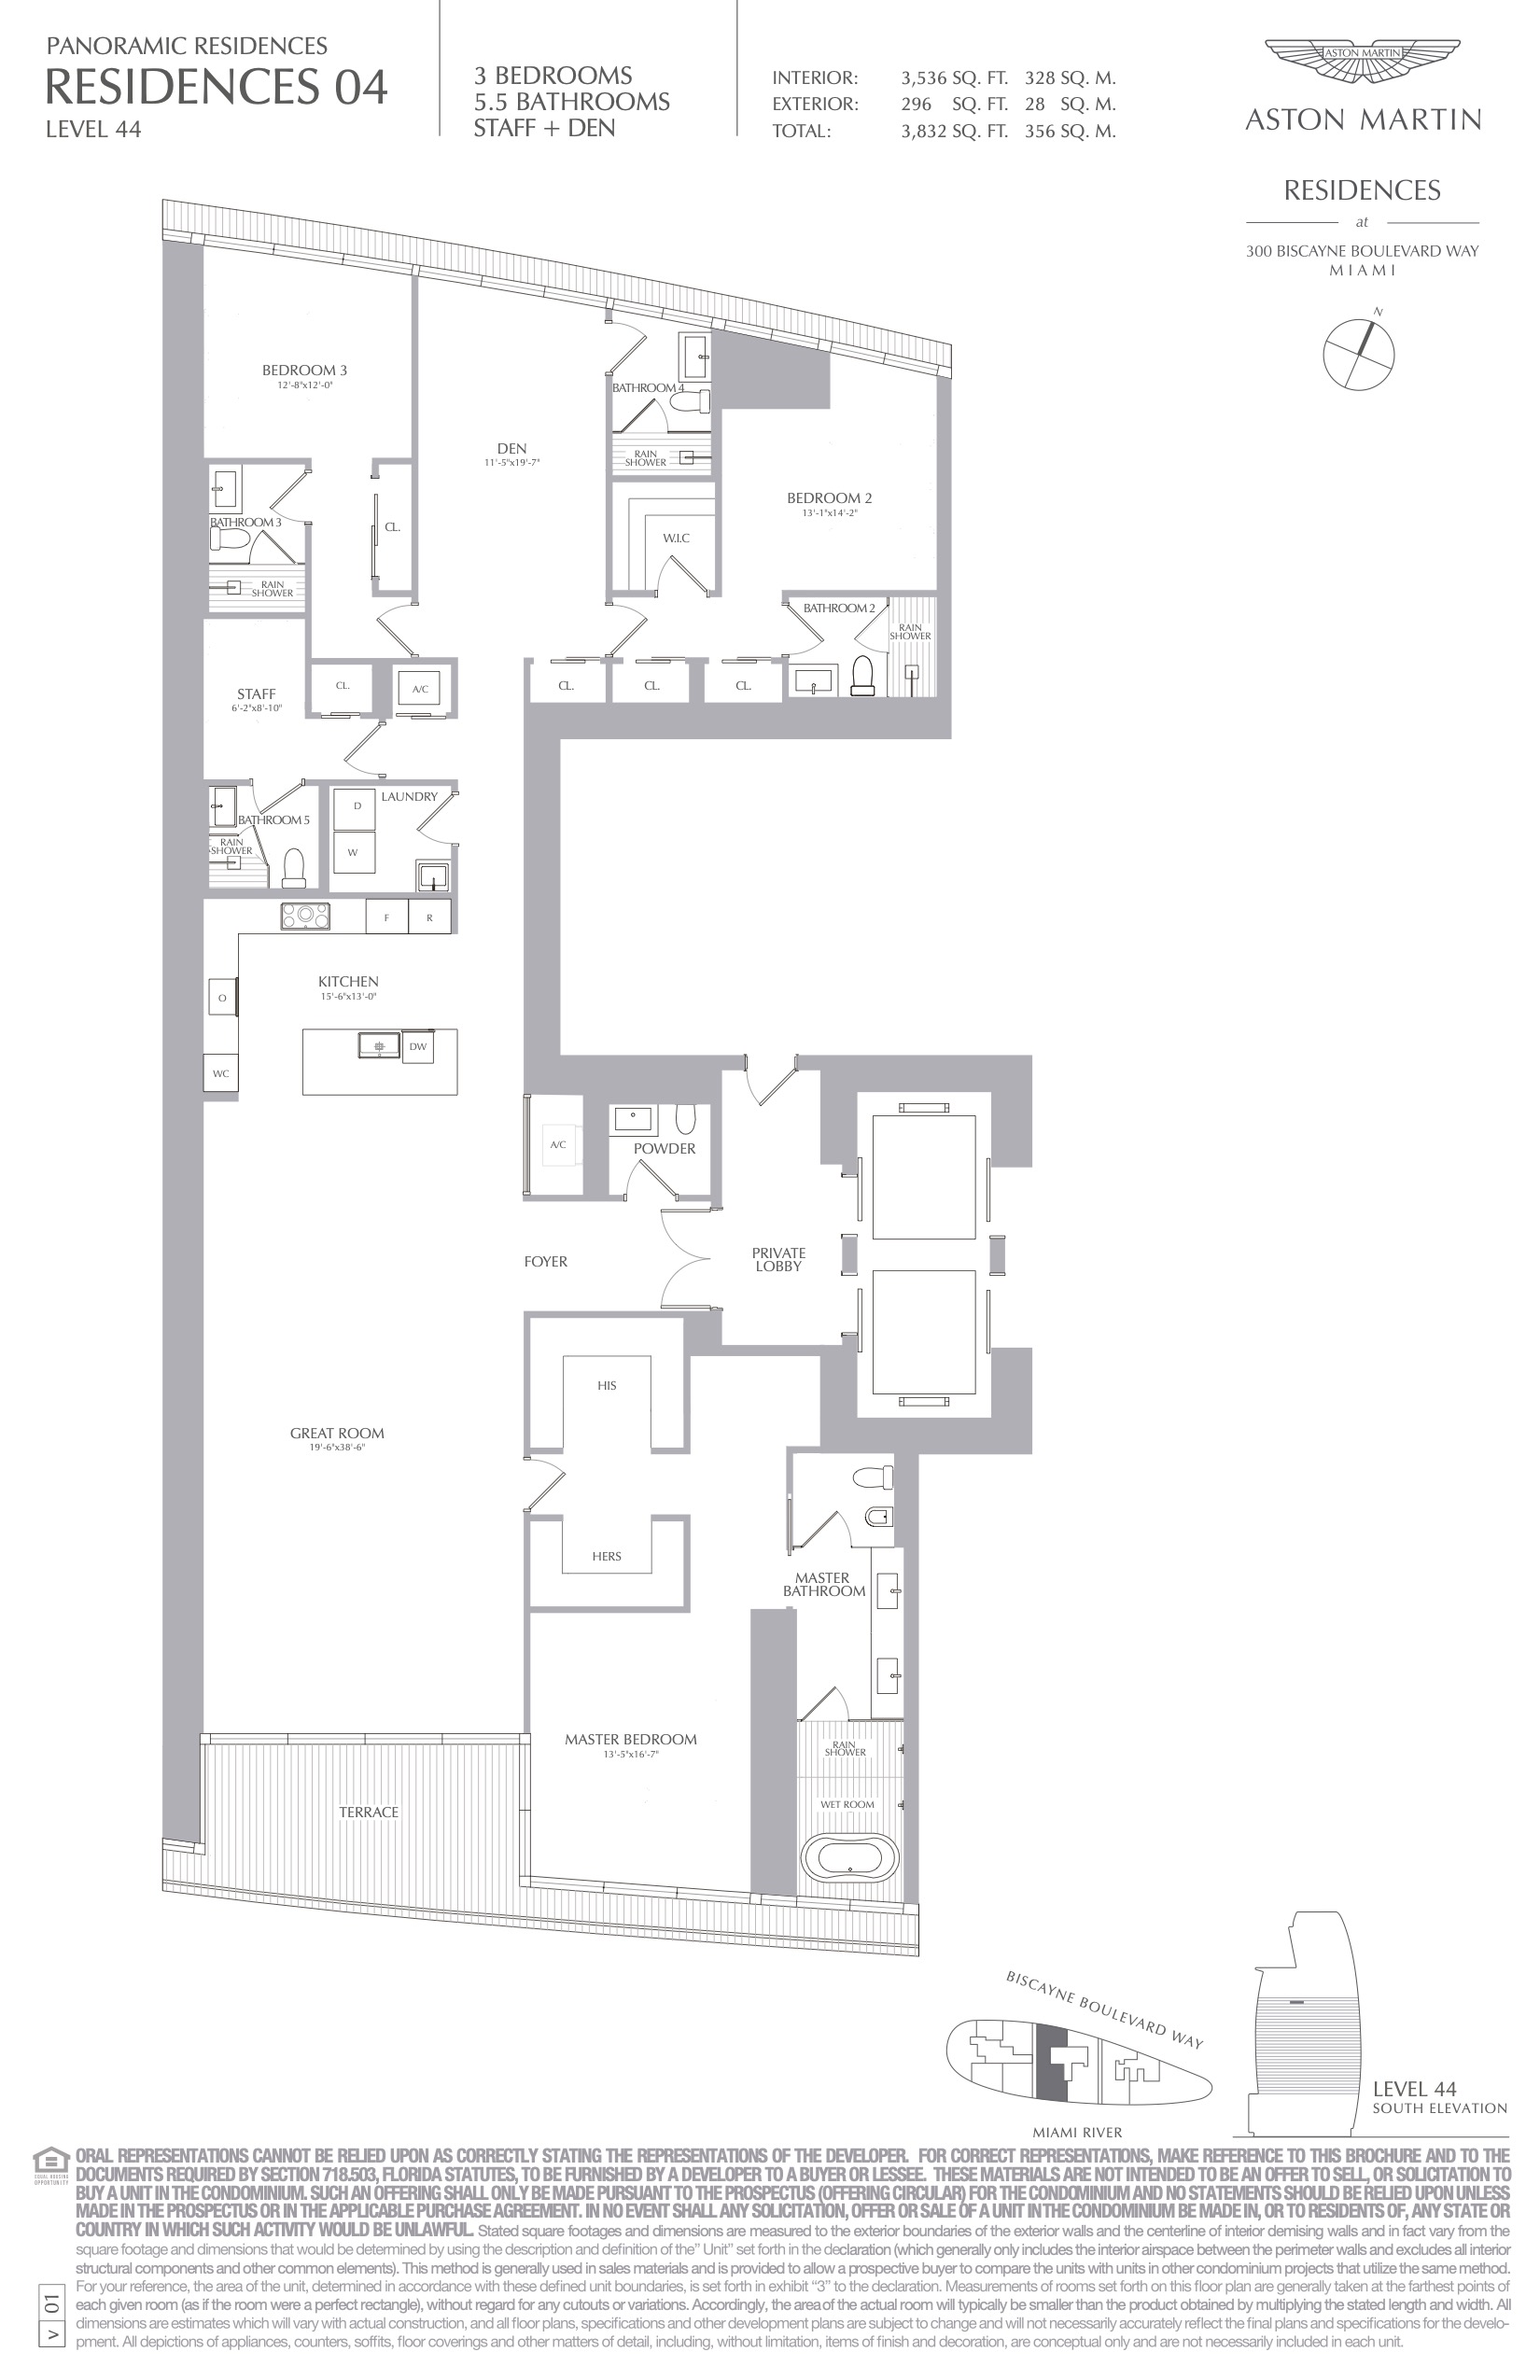 Residence 04 - Level 44